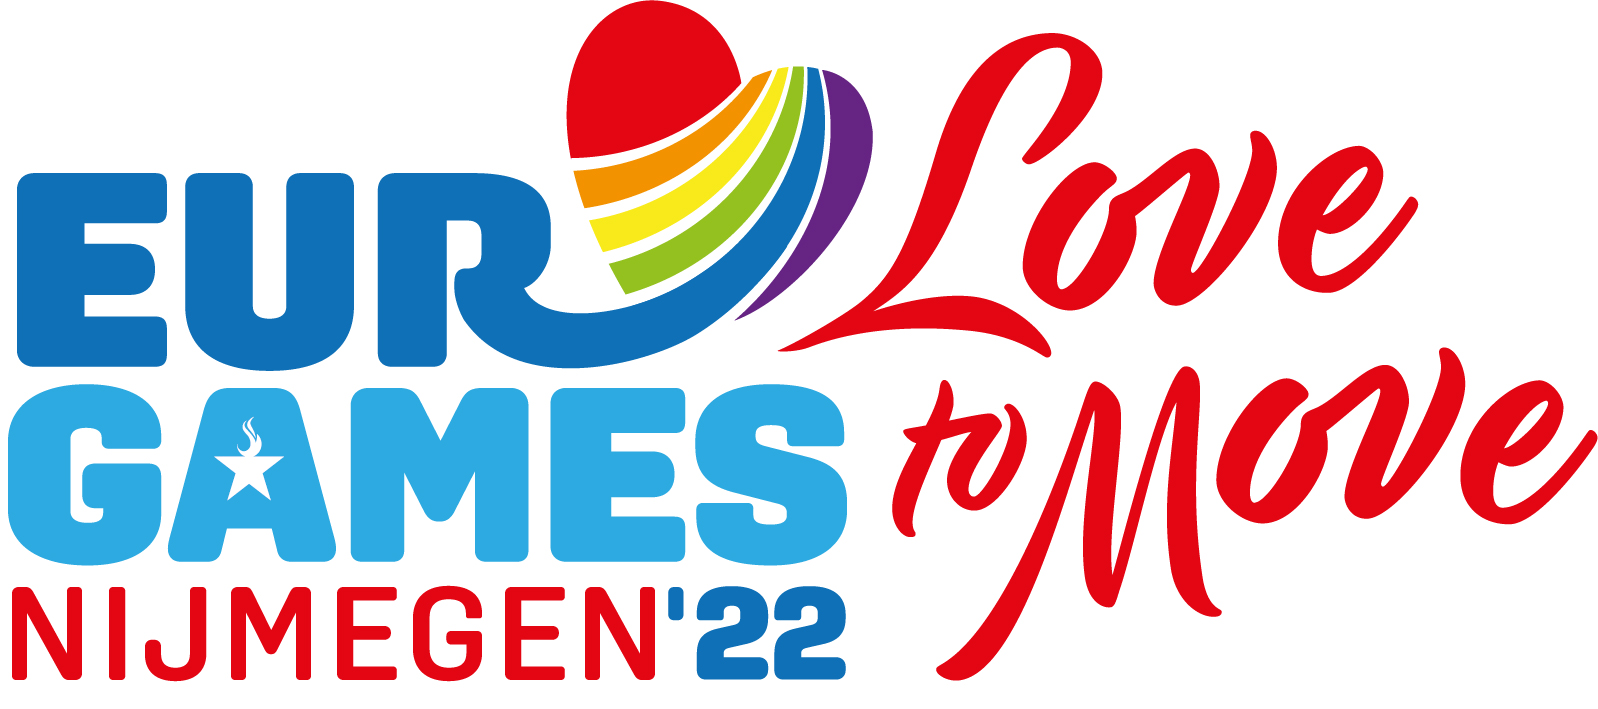 EuroGames 2022